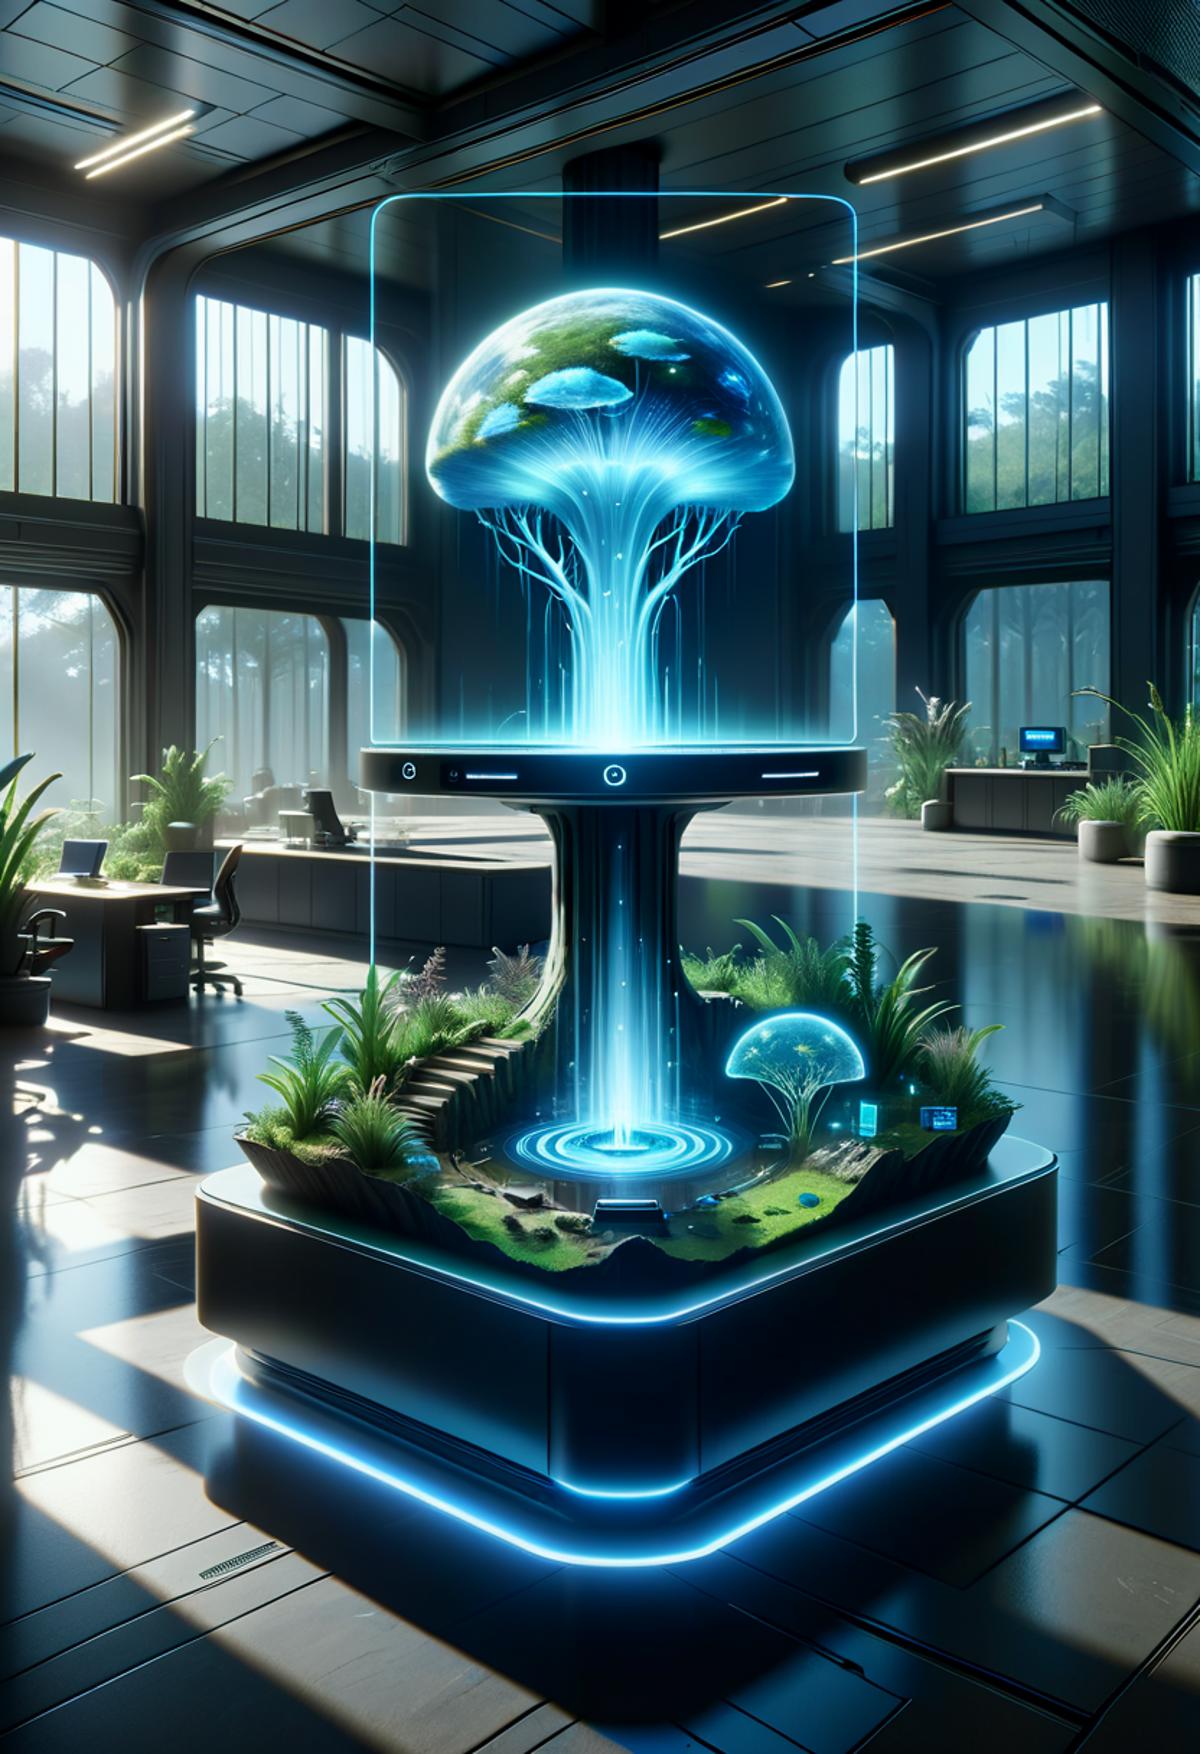 A futuristic, sci-fi plant display with a massive mushroom-like tree on a pedestal.